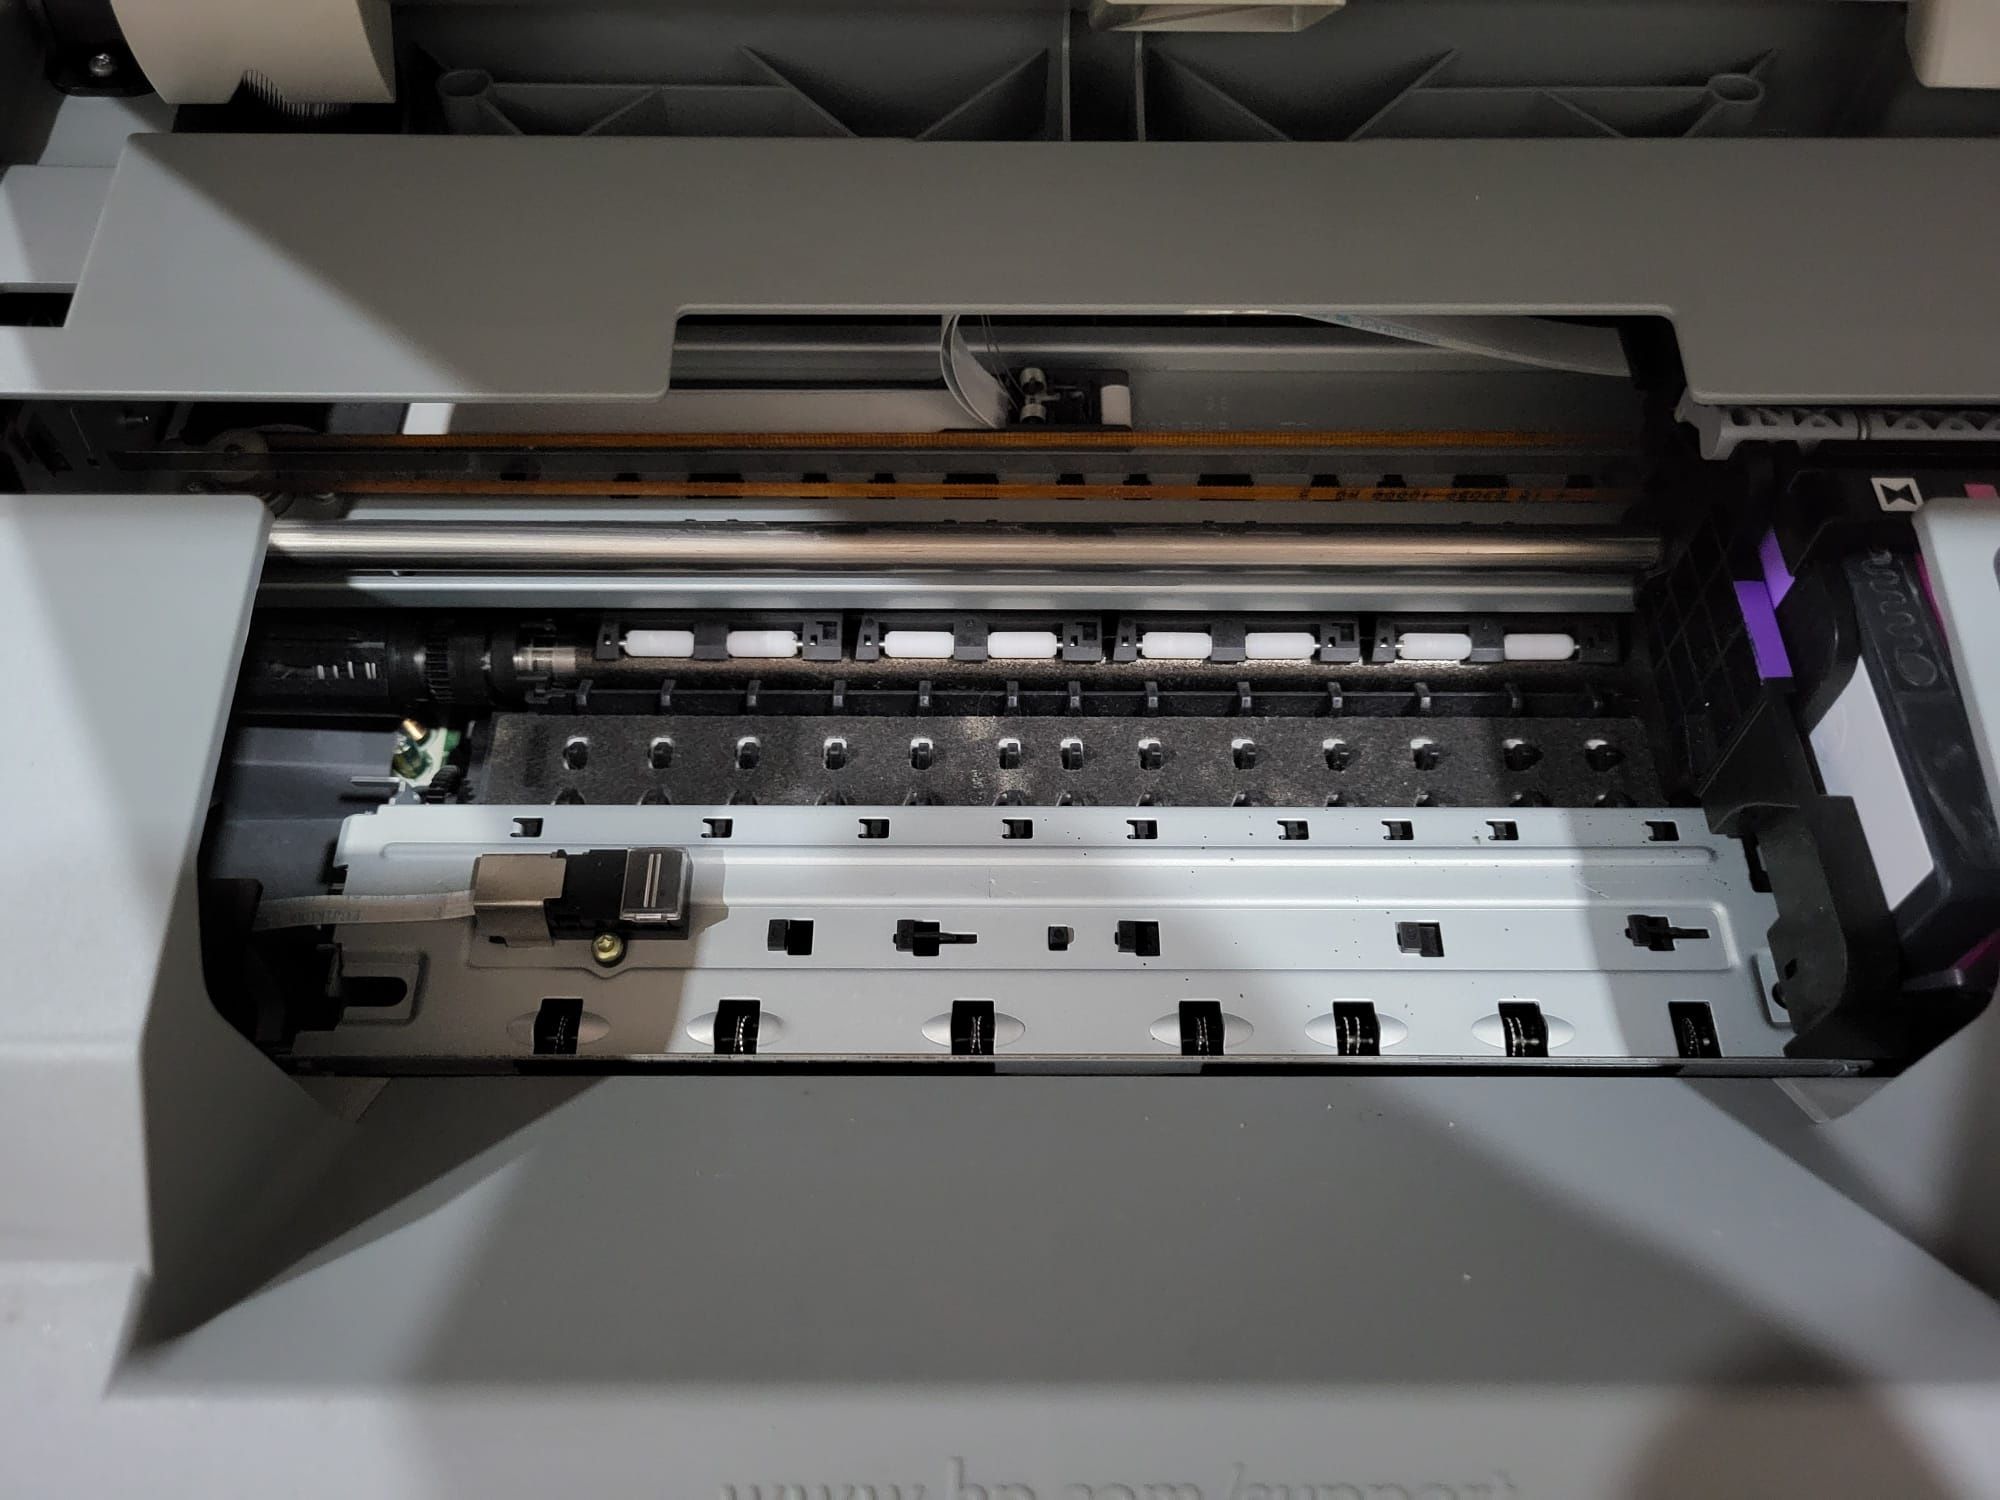 Impressora HP Photsmart C6380 All in One